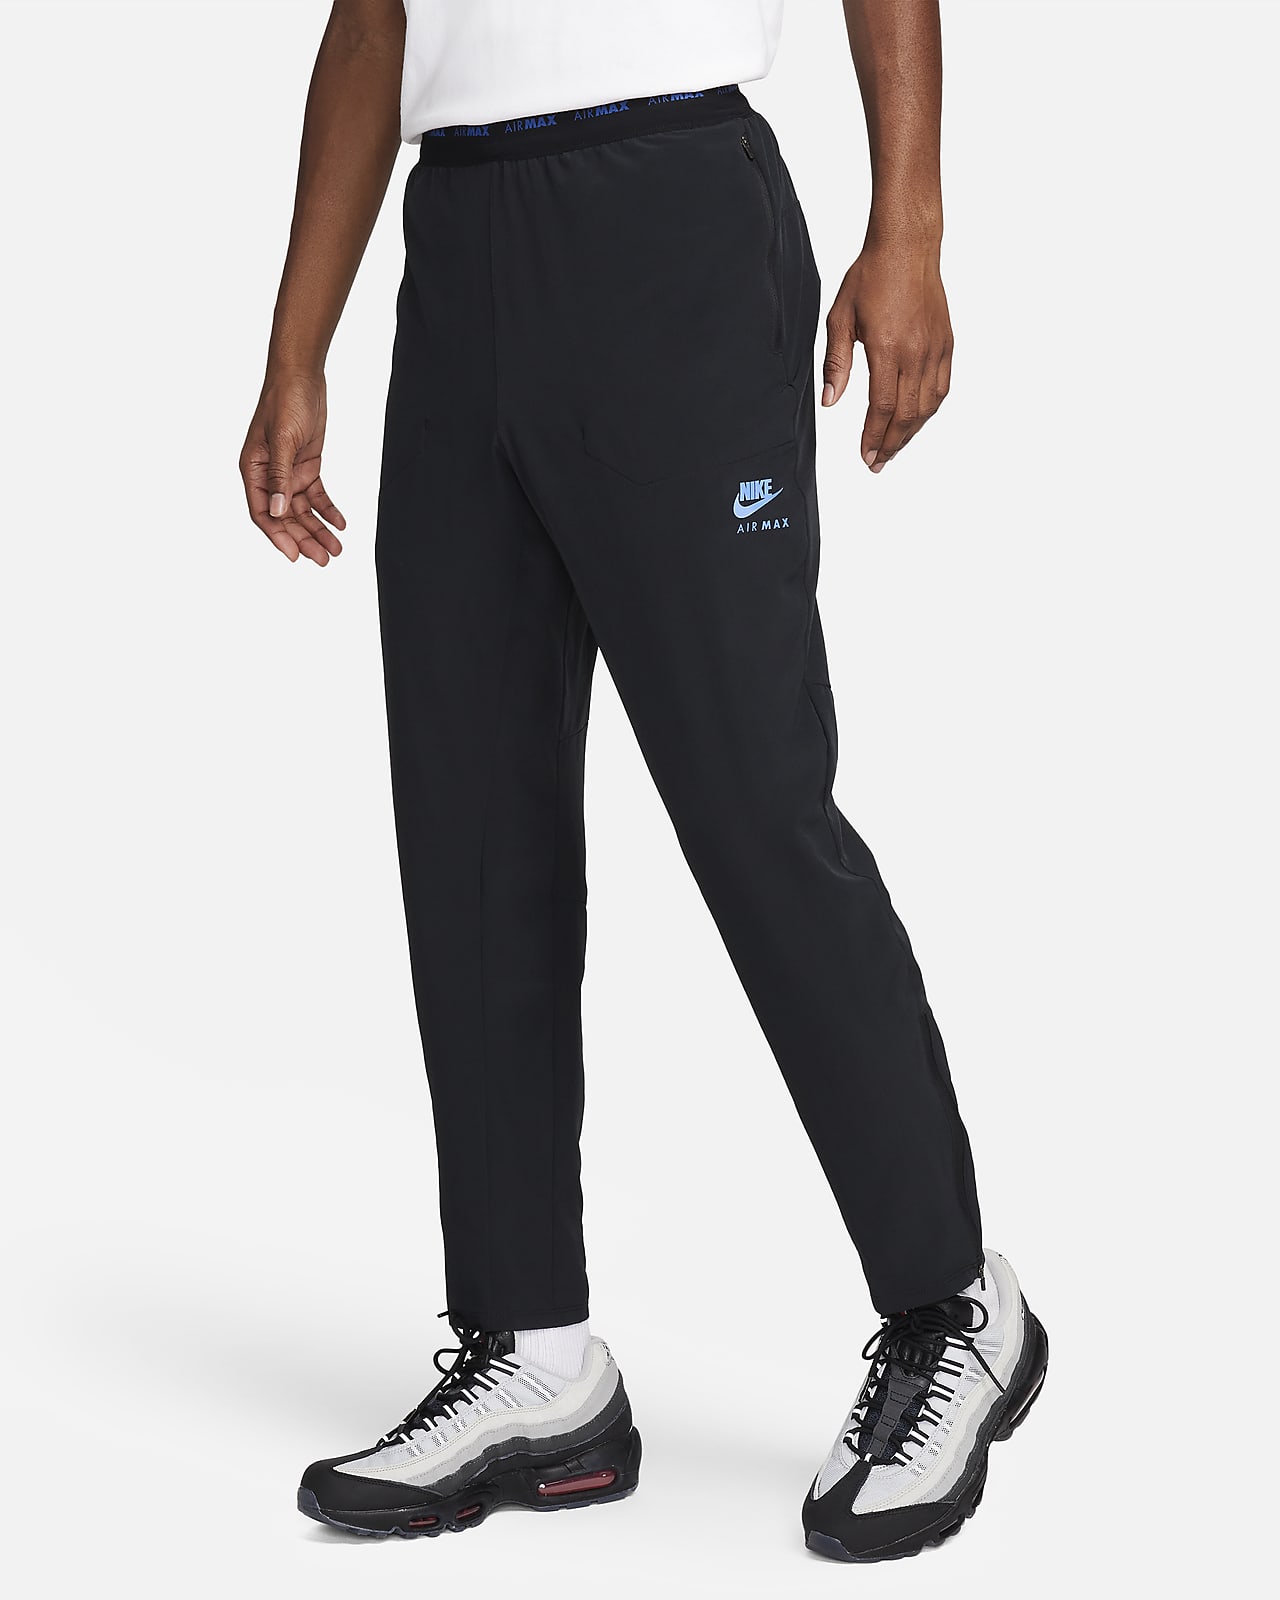 Pantalon tissé Dri-FIT Nike Air Max pour homme